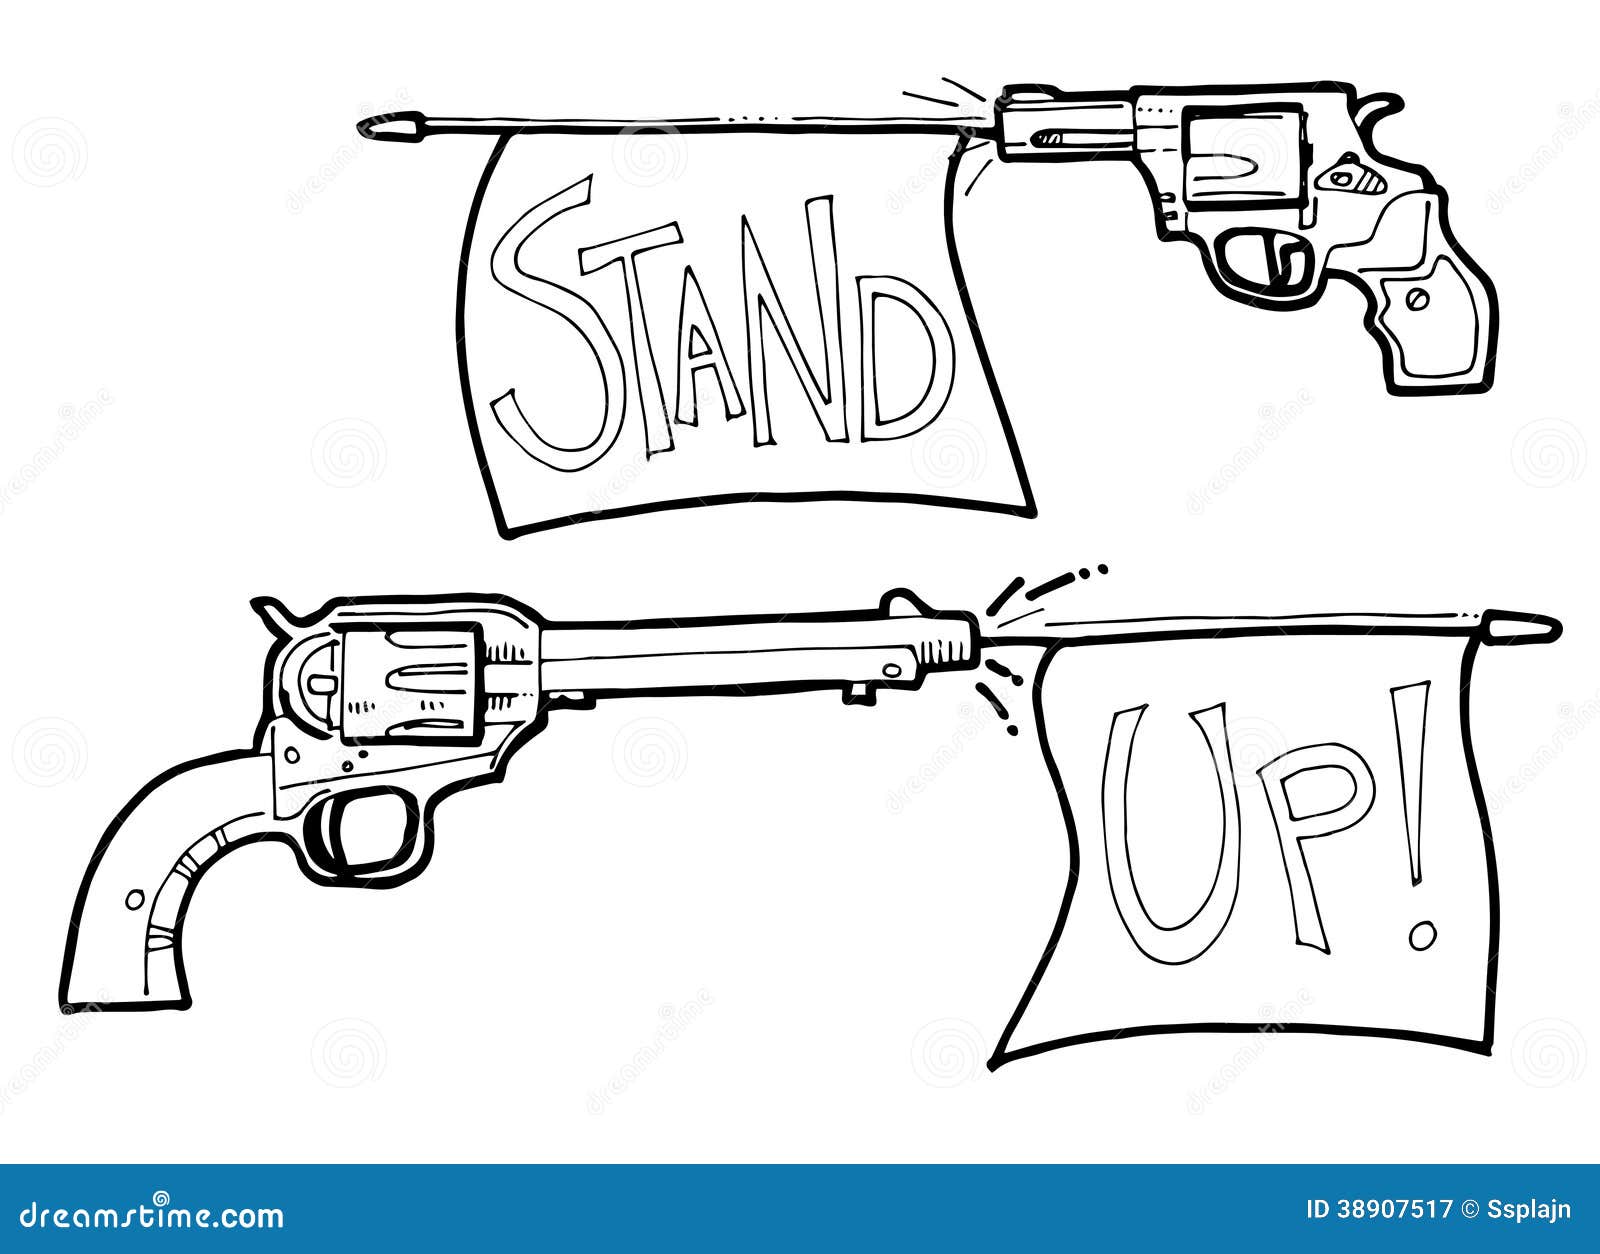 Cartoon gun and revolver with bang flag illustration. Stand up